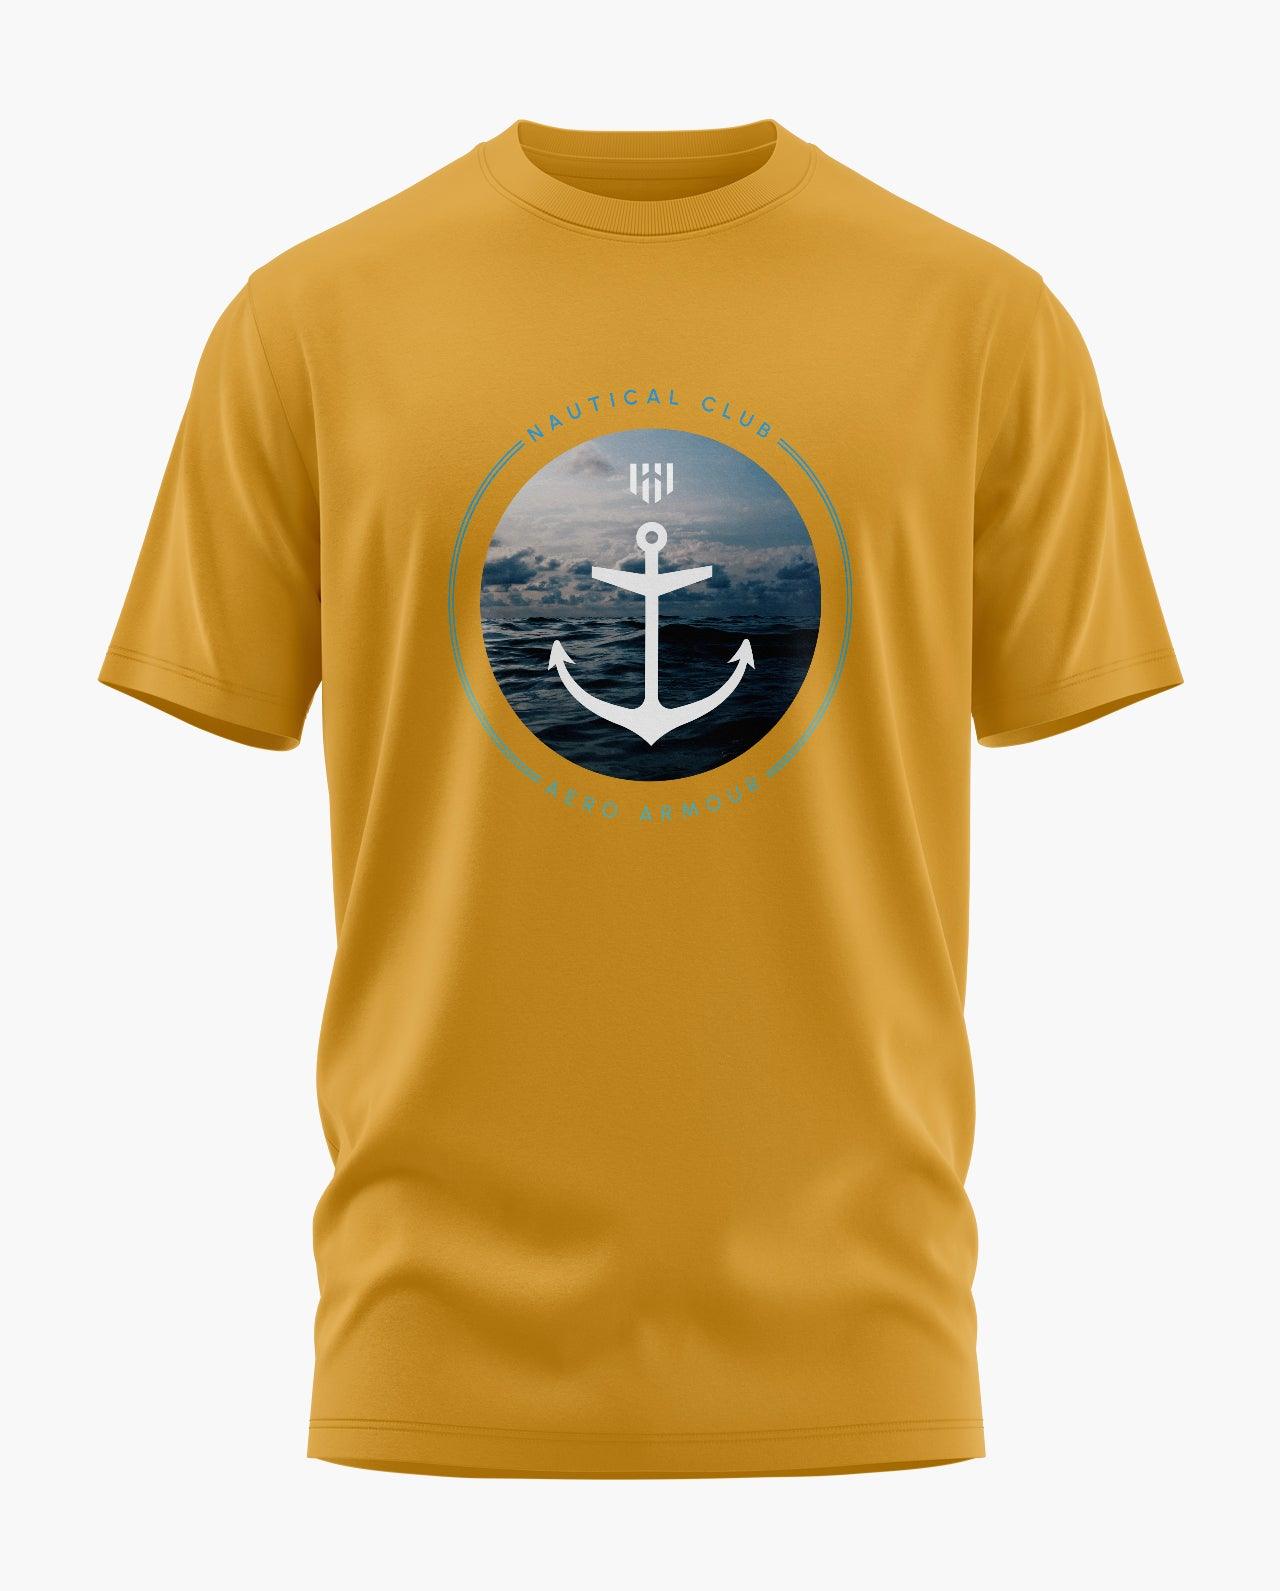 Nautical Club T-Shirt - Aero Armour